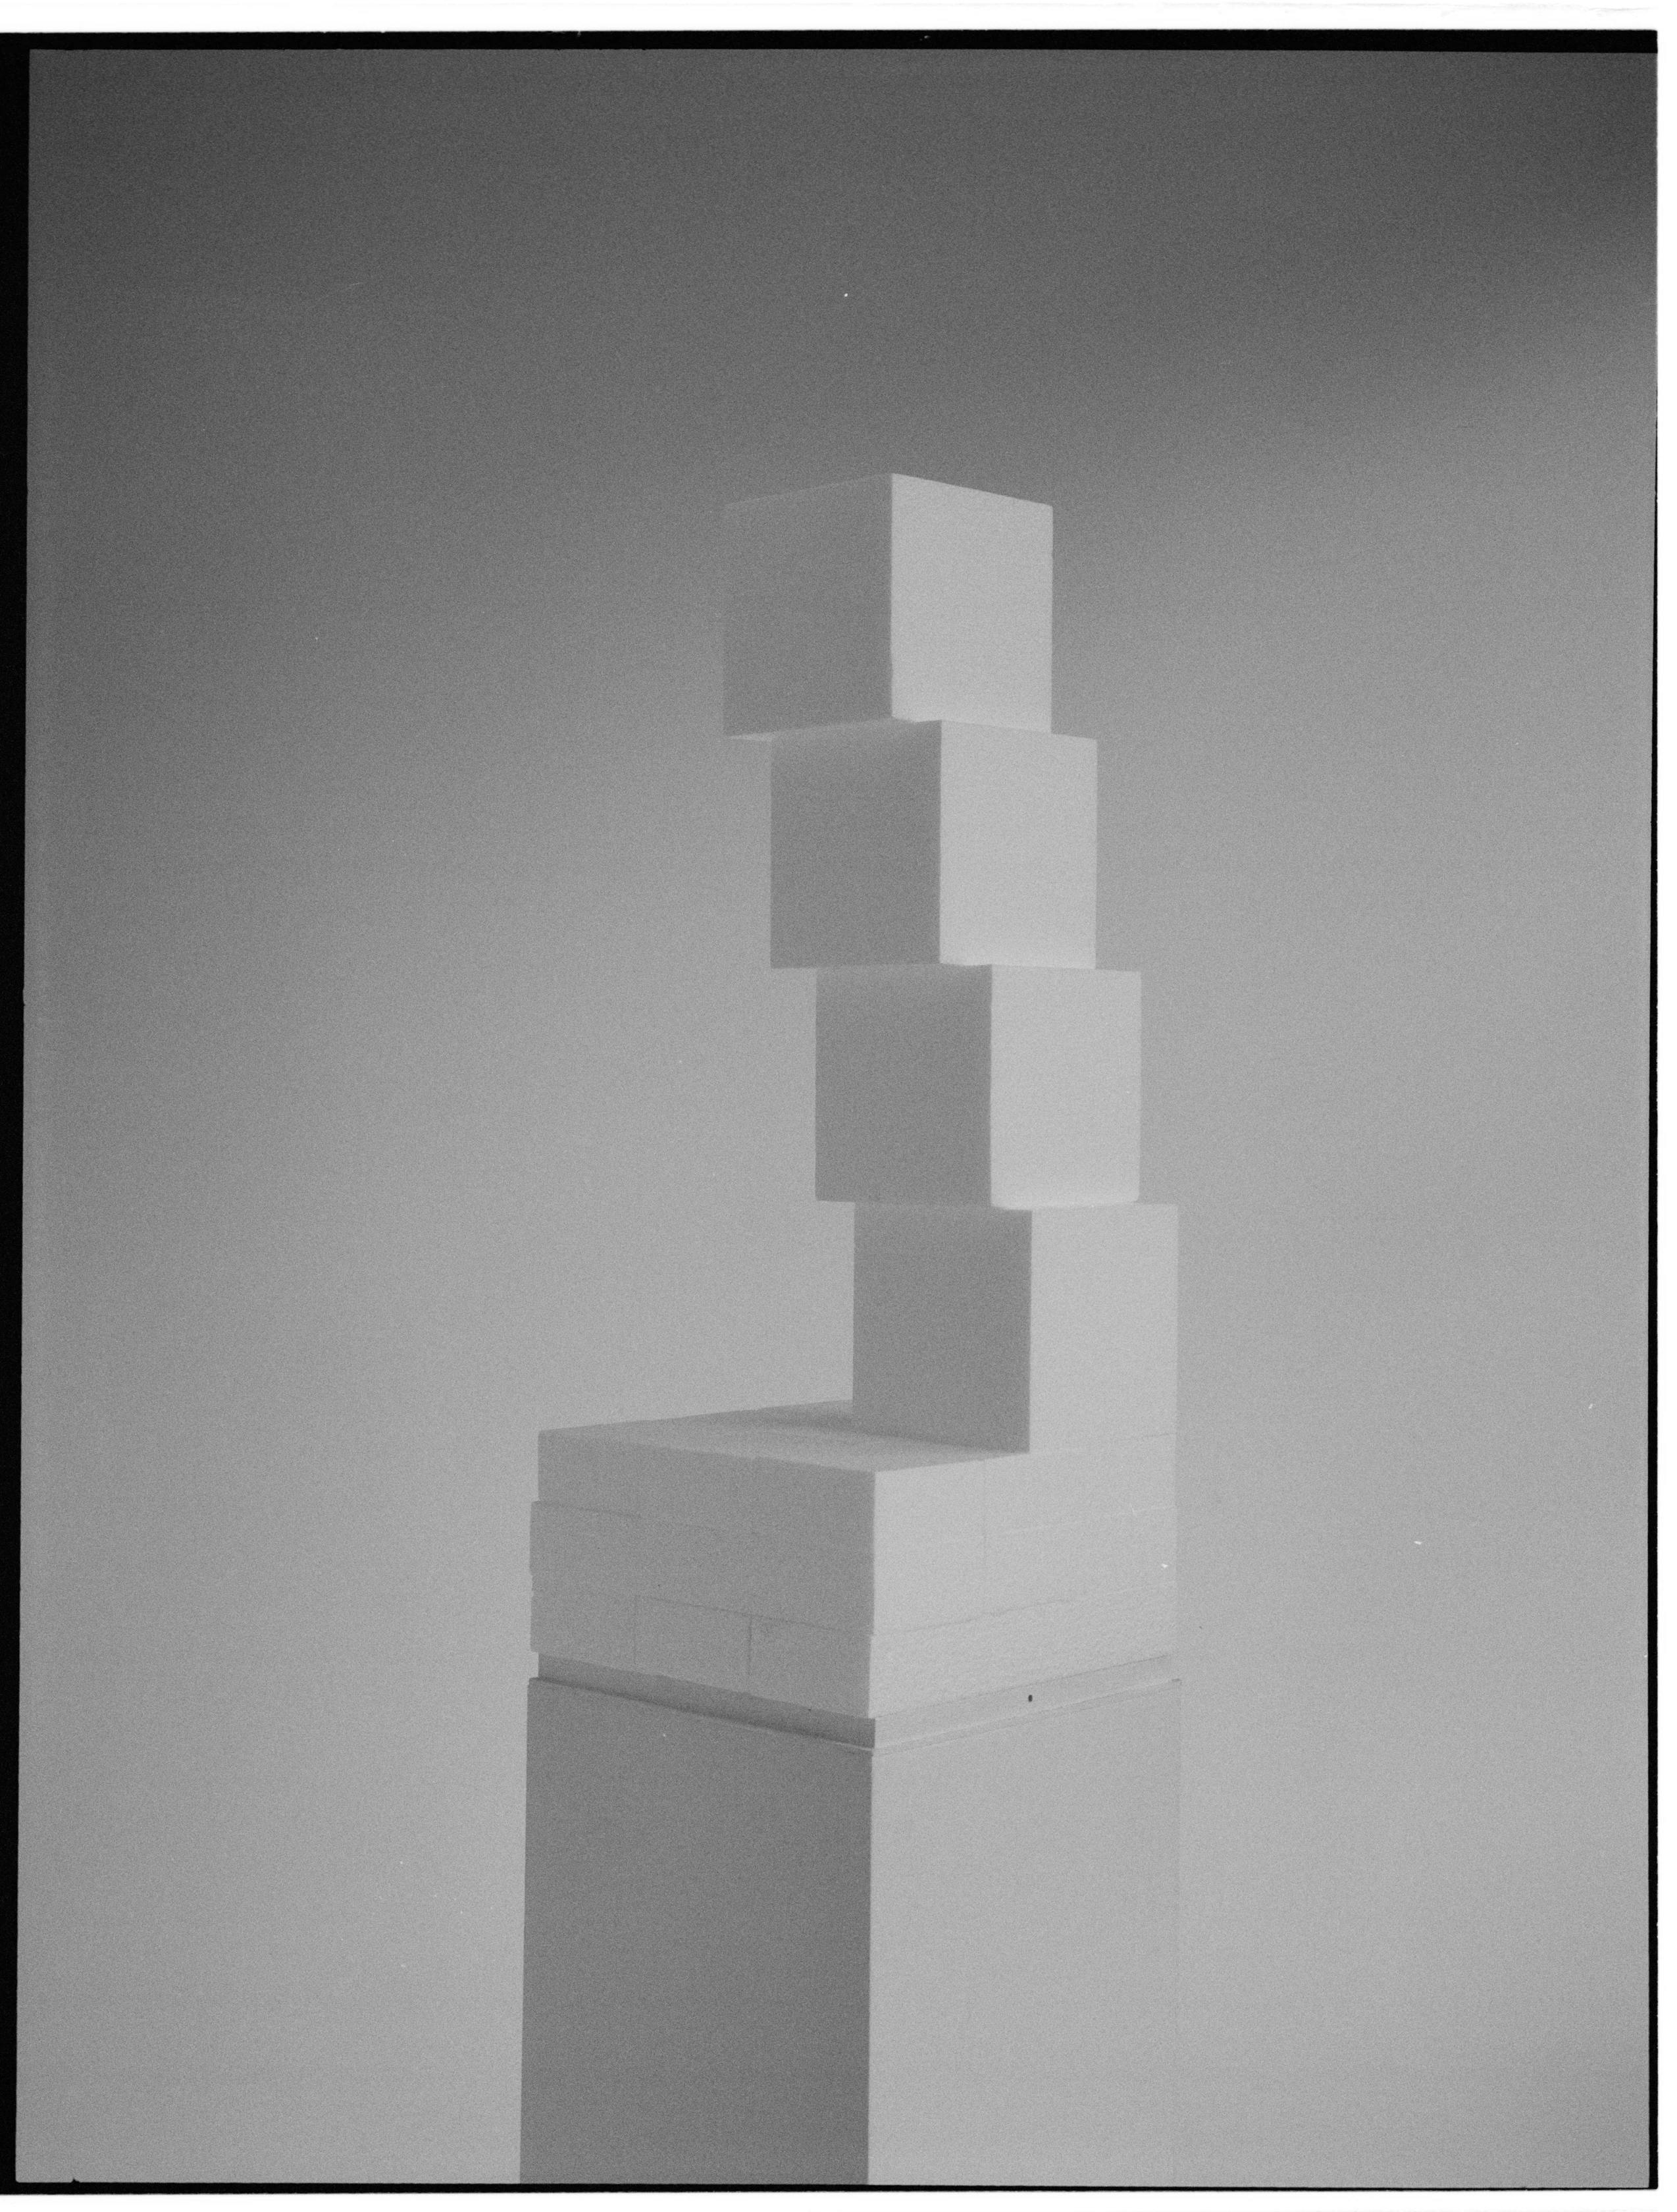 Black and white photograph of a styrofoam sculpture by artist Adam Ryder.